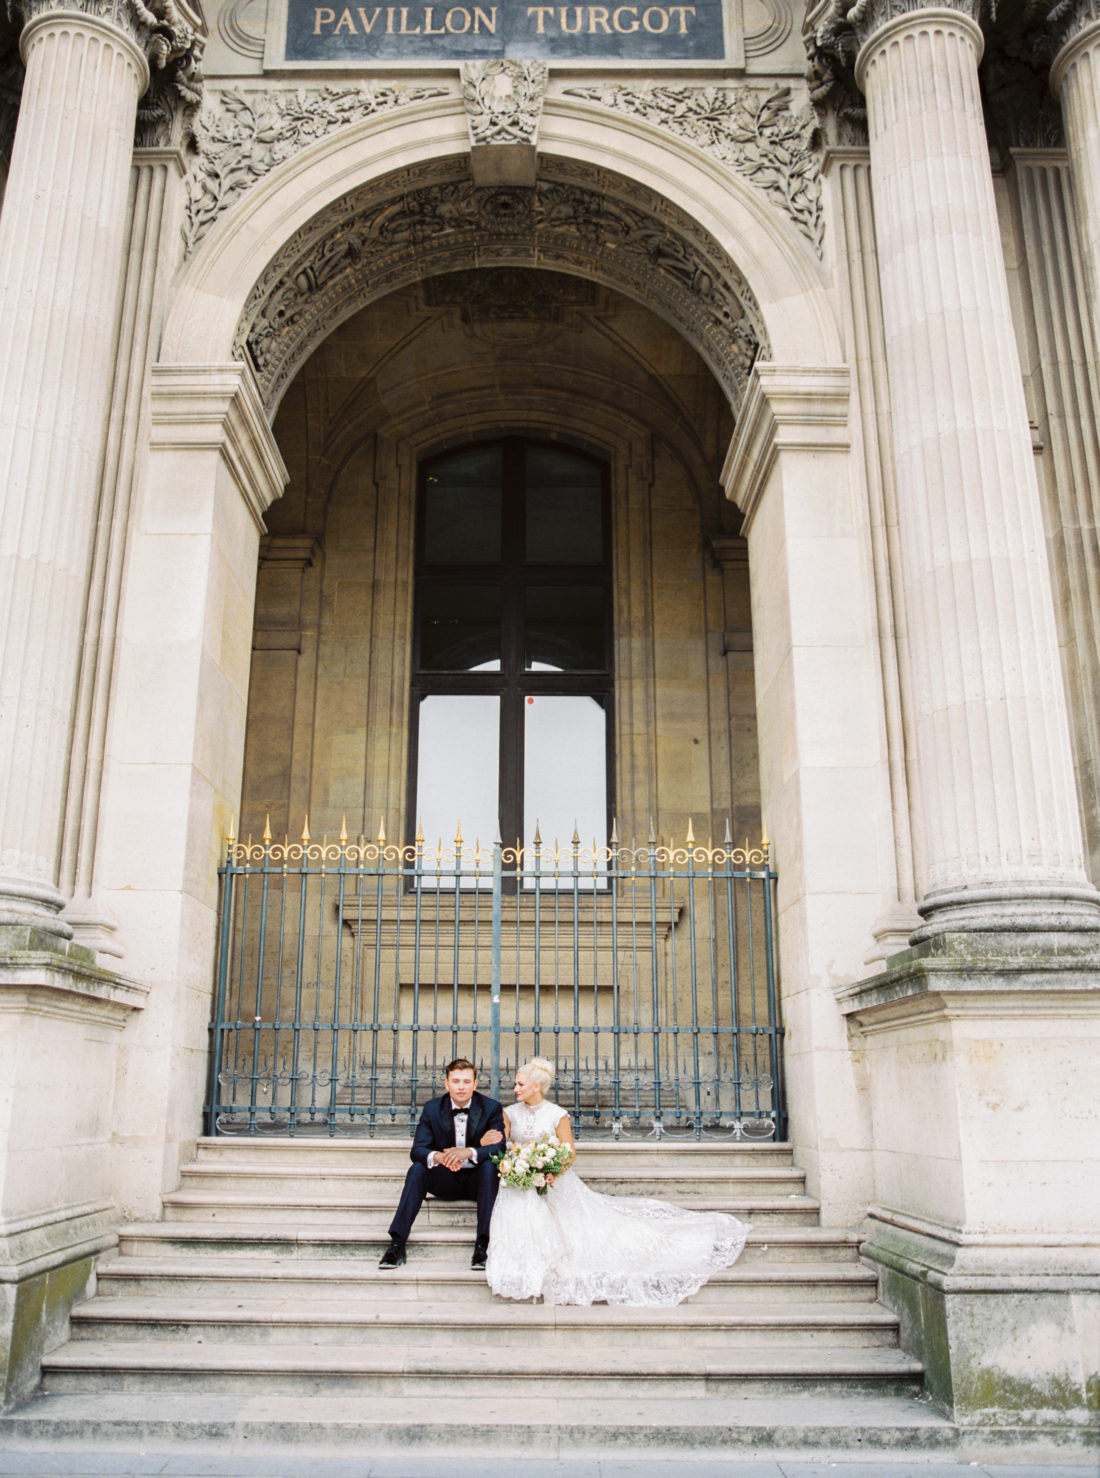 paris wedding planner rachael ellen events tips post photo 12